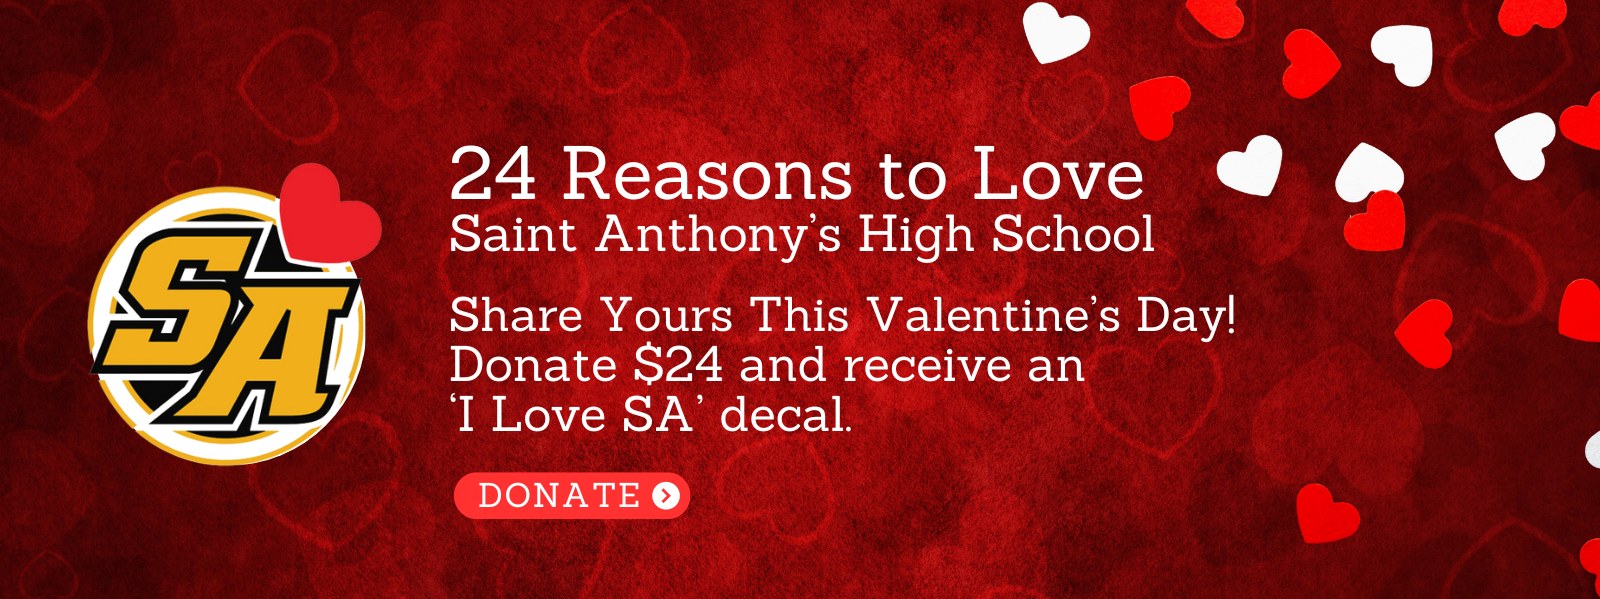 24 Reasons to Love Saint Anthony’s High School 2